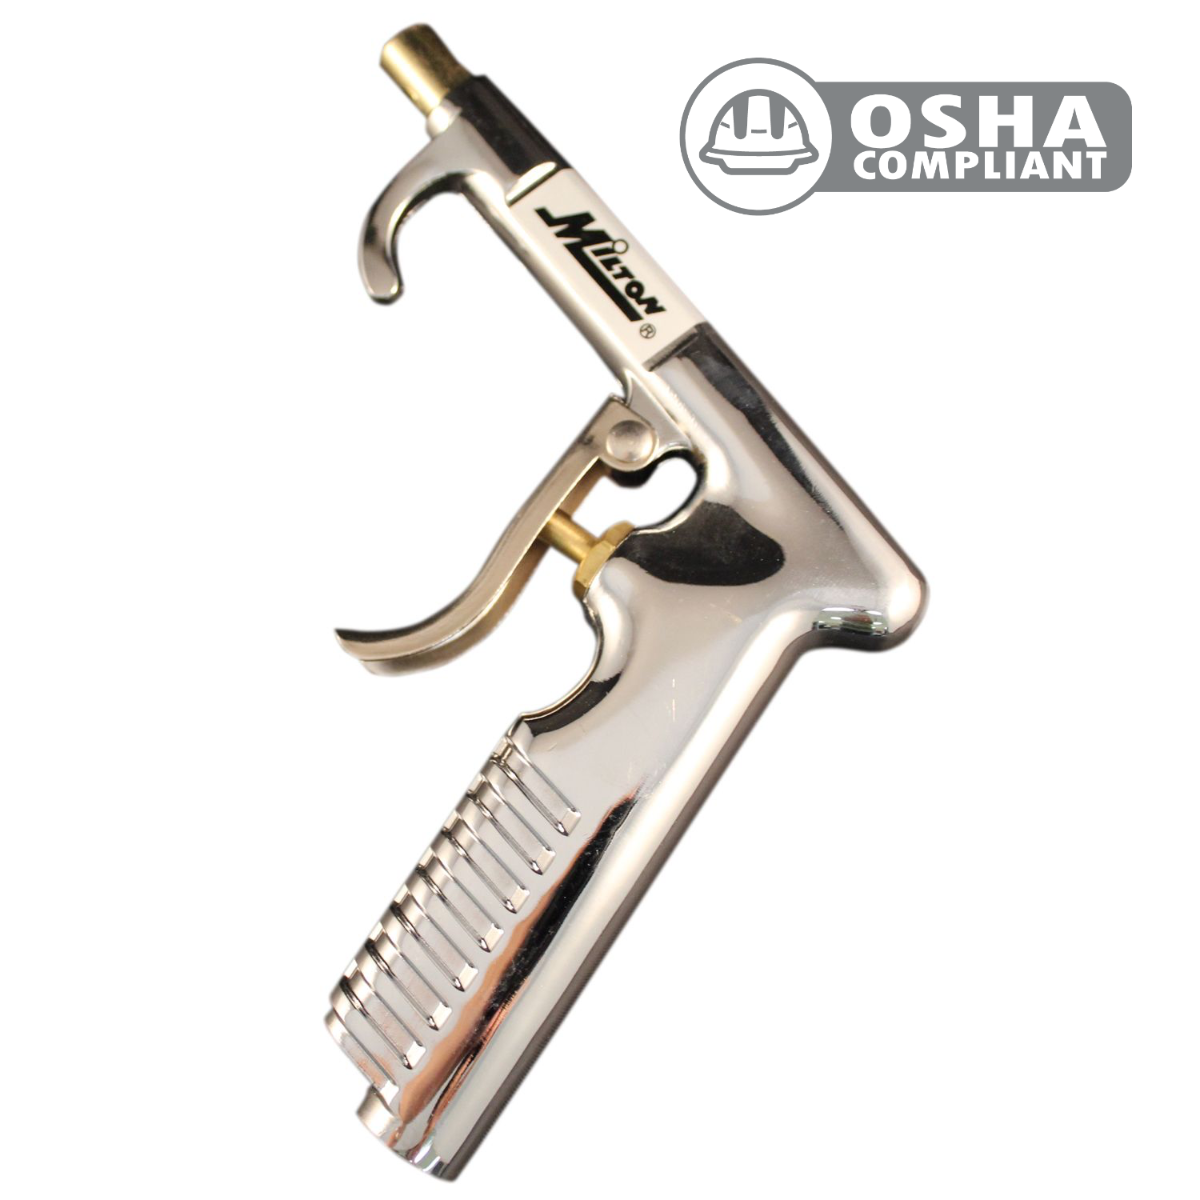 Pistol Grip Blow Gun with OSHA-Compliant Safety Tip